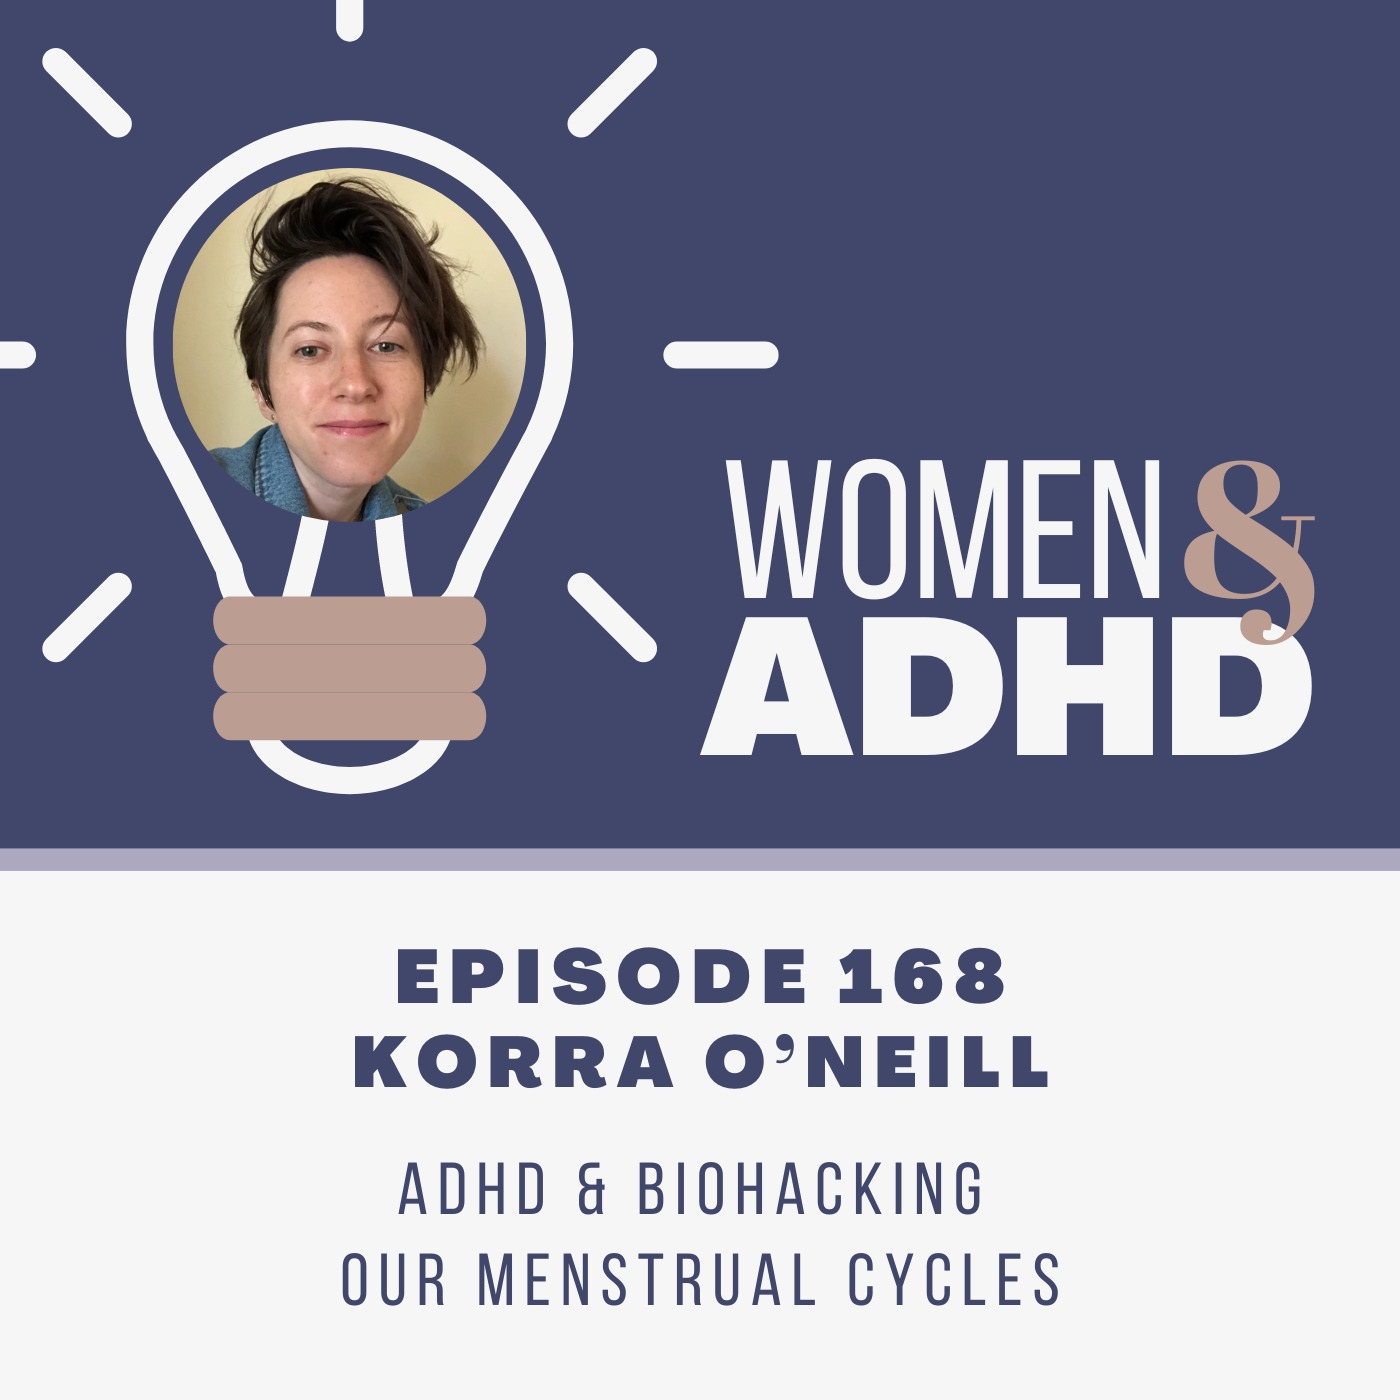 Korra O’Neill: ADHD & biohacking our menstrual cycles